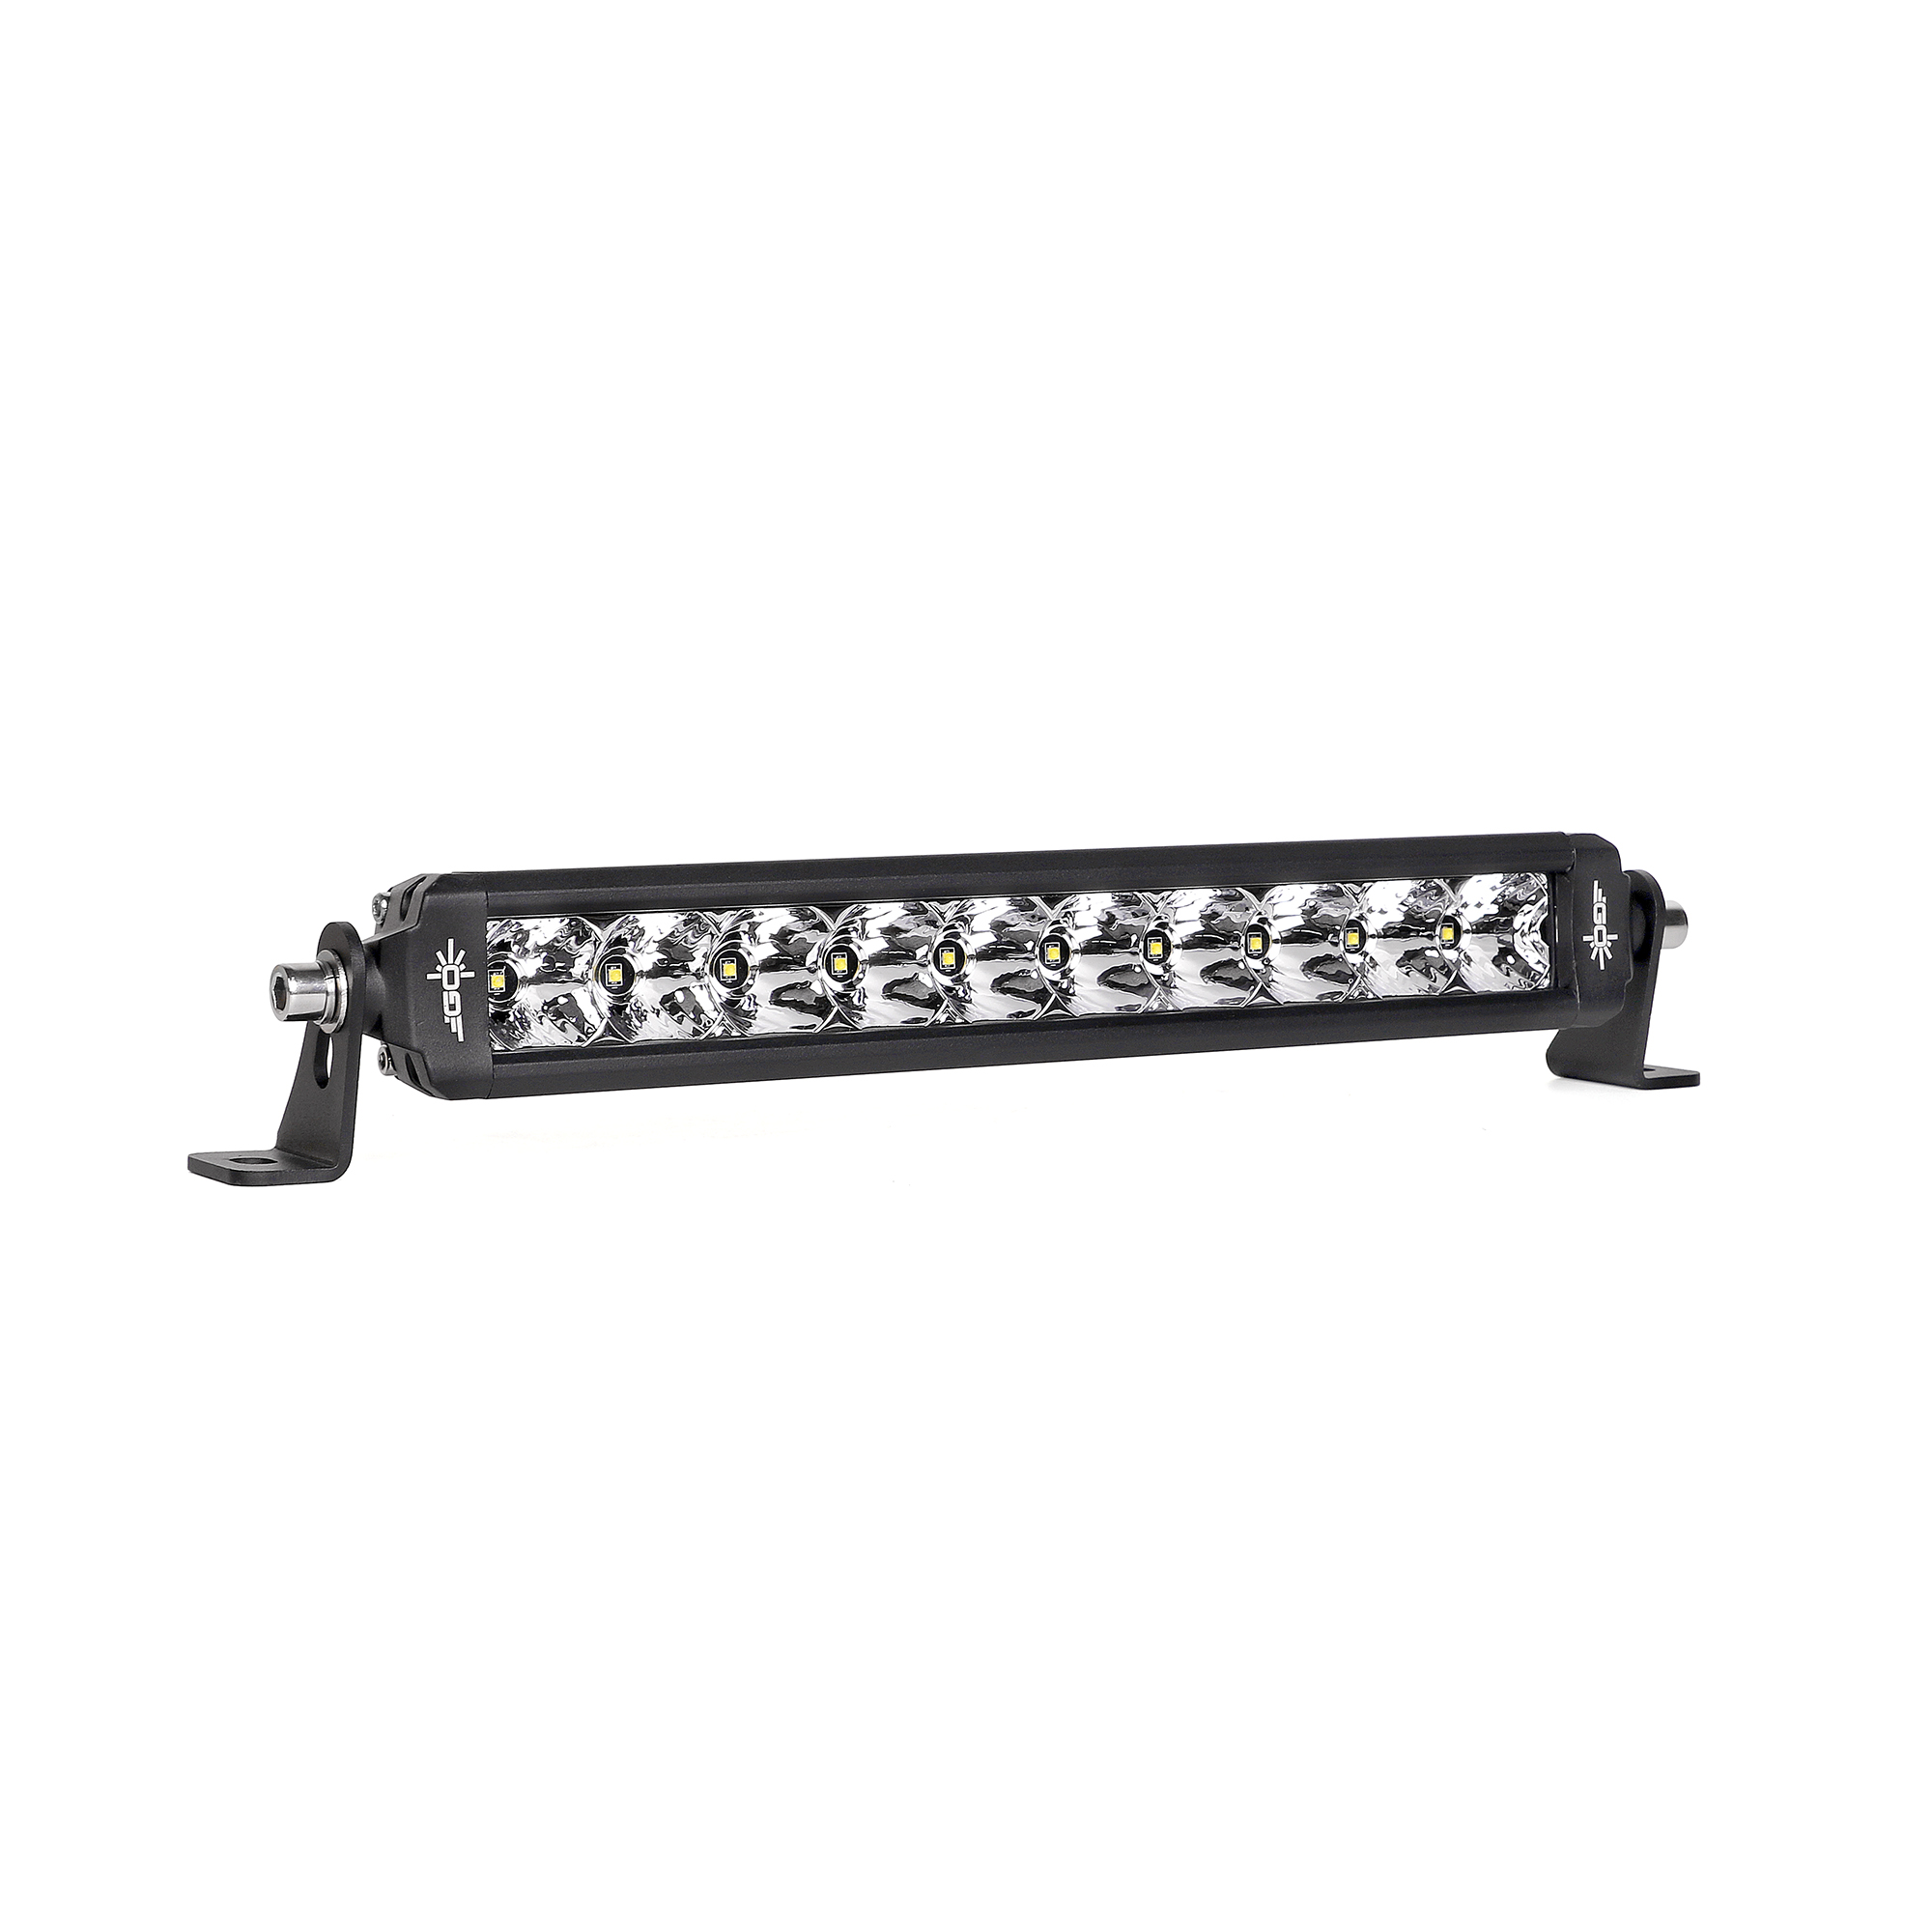 L3 Series Light Bar, 12″, Combo Beam, Single Row – 48A811 | GO Performance